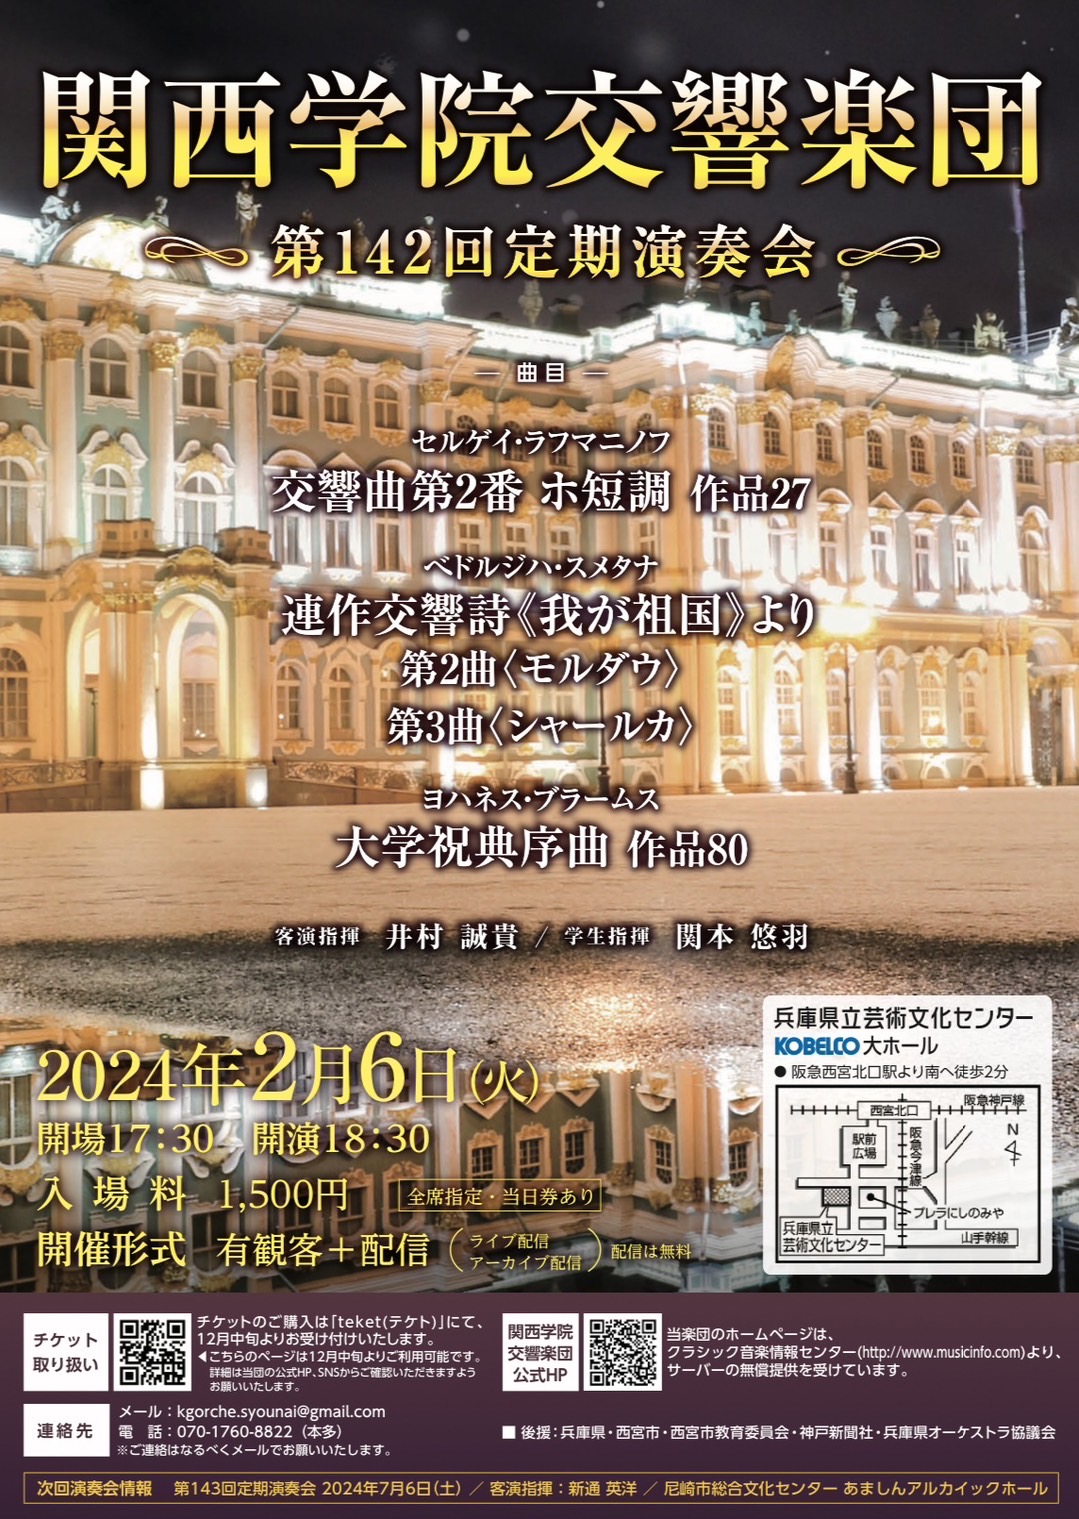 関西学院交響楽団第142回定期演奏会のフライヤー画像